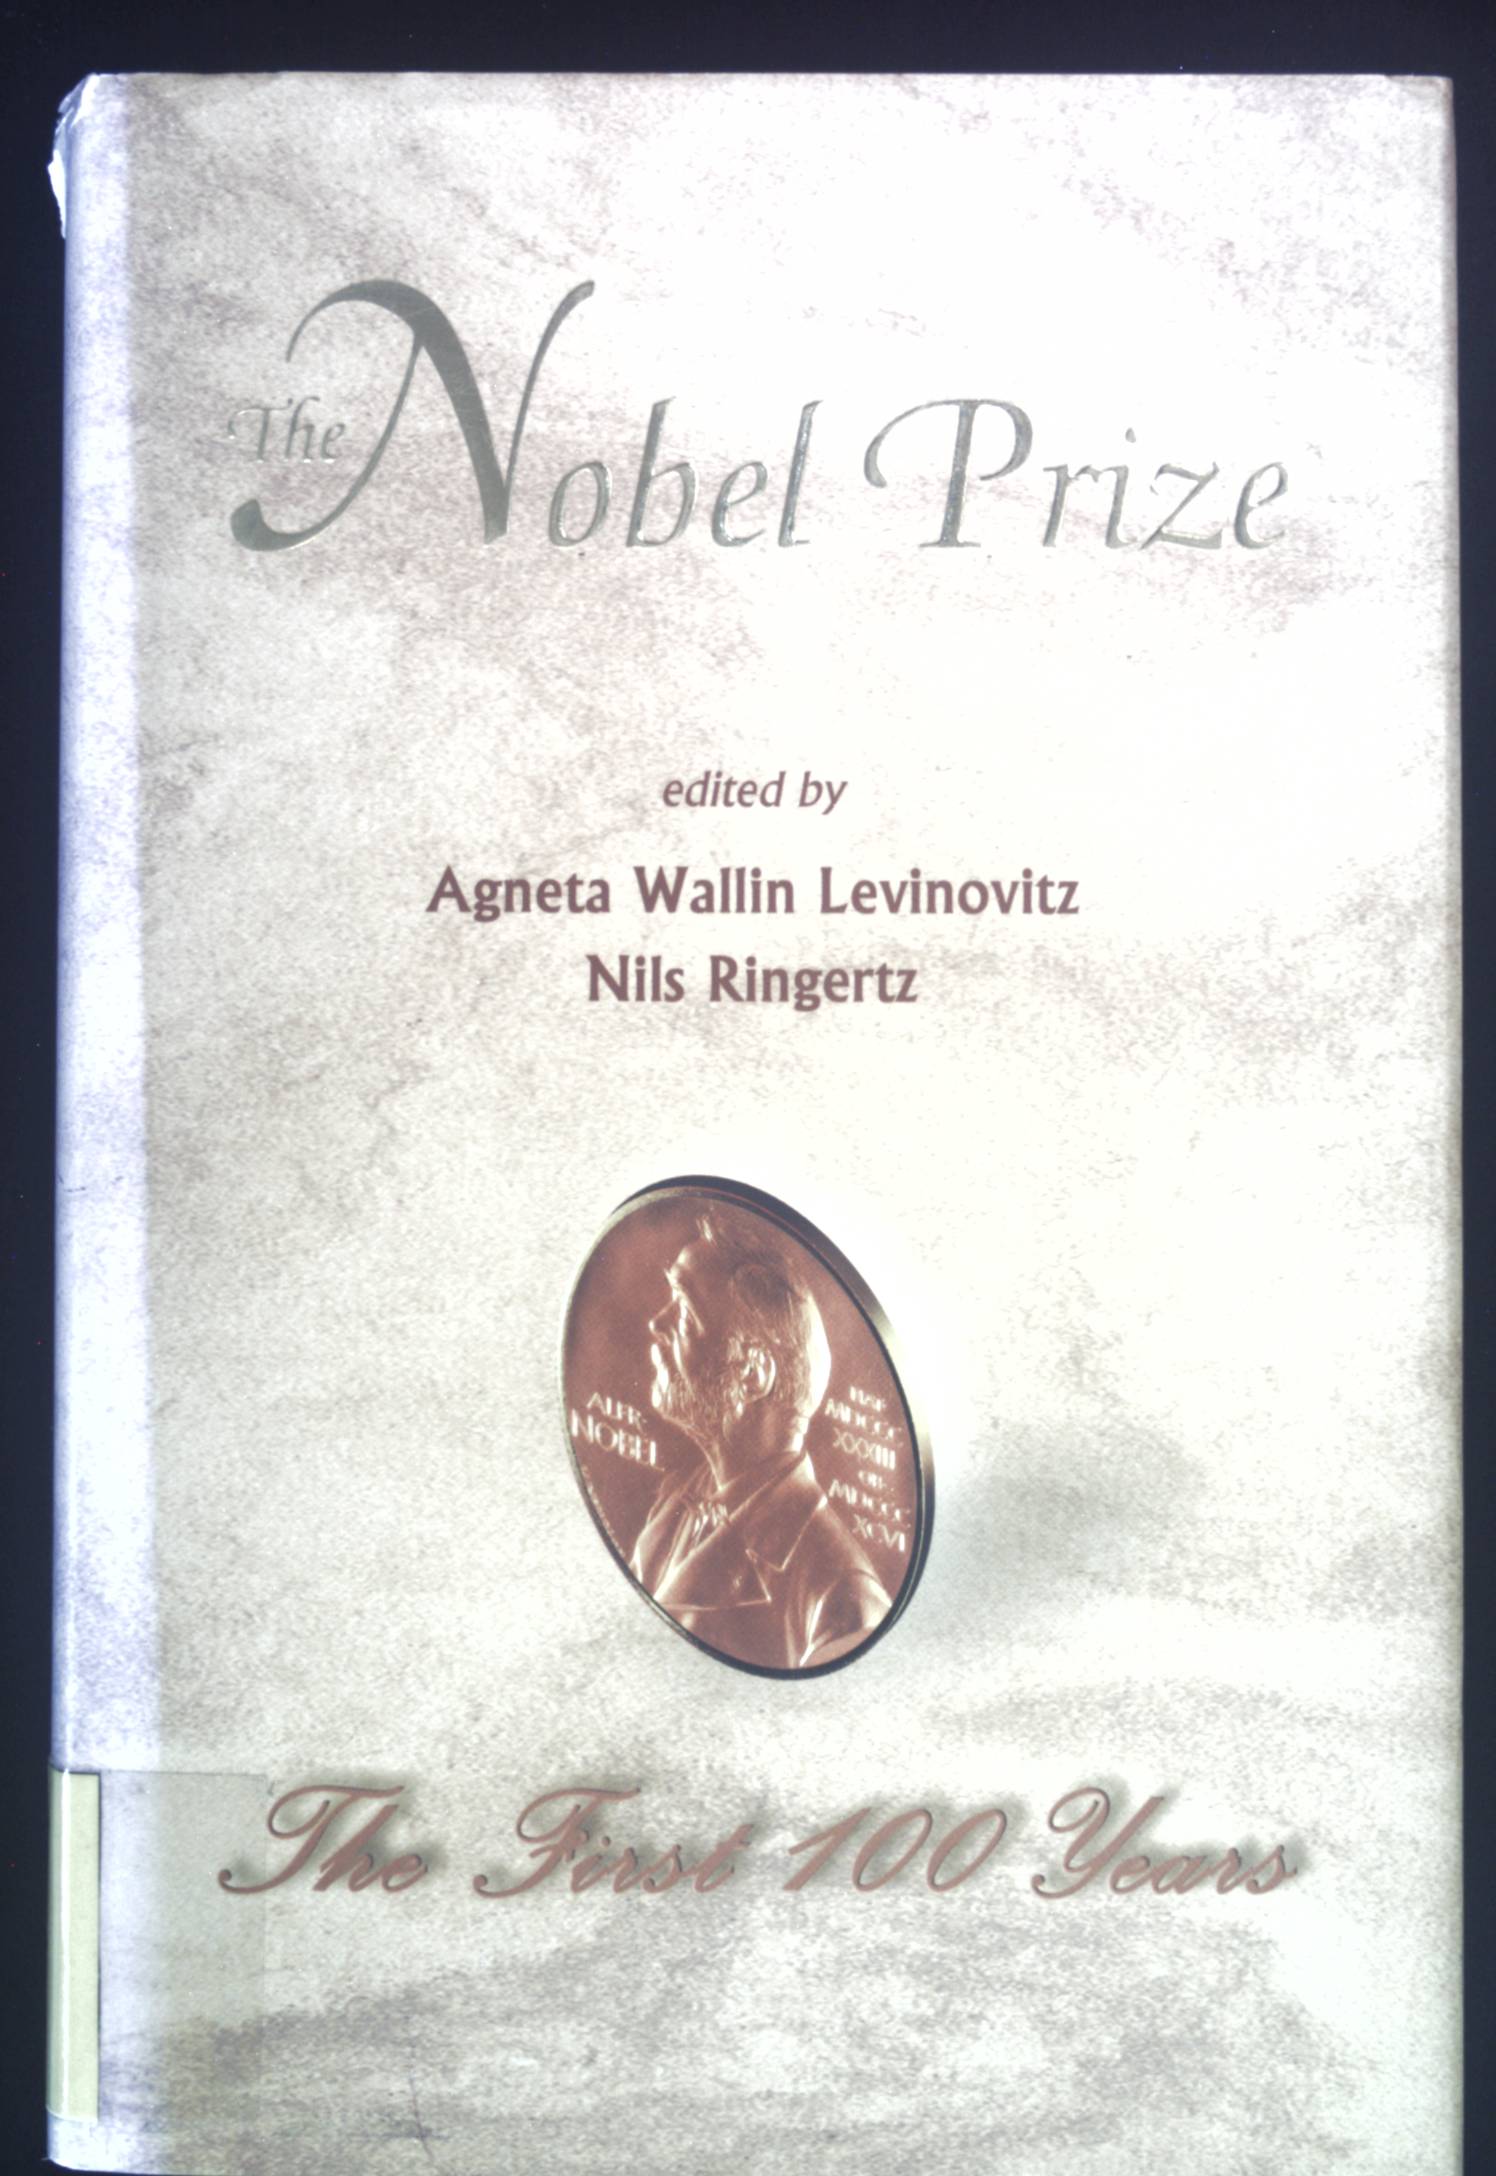 Nobel Prize, The: The First 100 Years. - Levinovitz, Agneta Wallin and Nils Ringertz